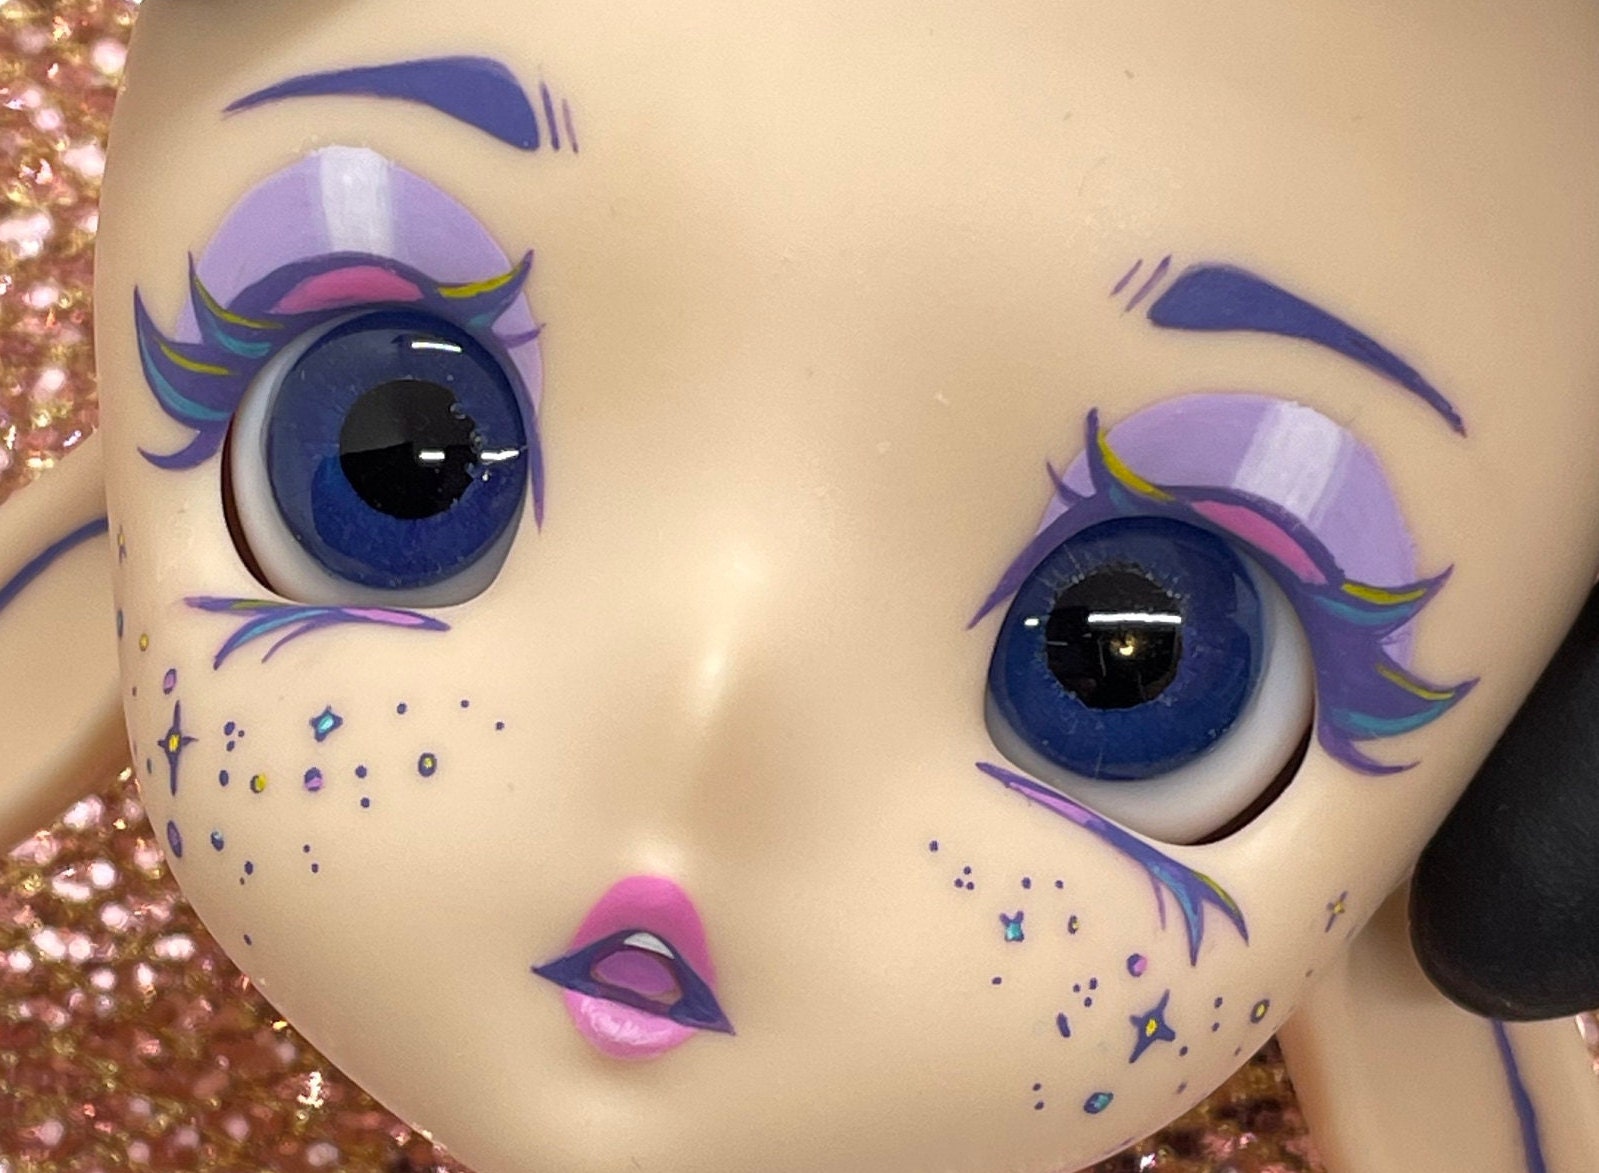 Doll Eyelashes, Auburn, Tutorial, Doll Making, Doll Repair